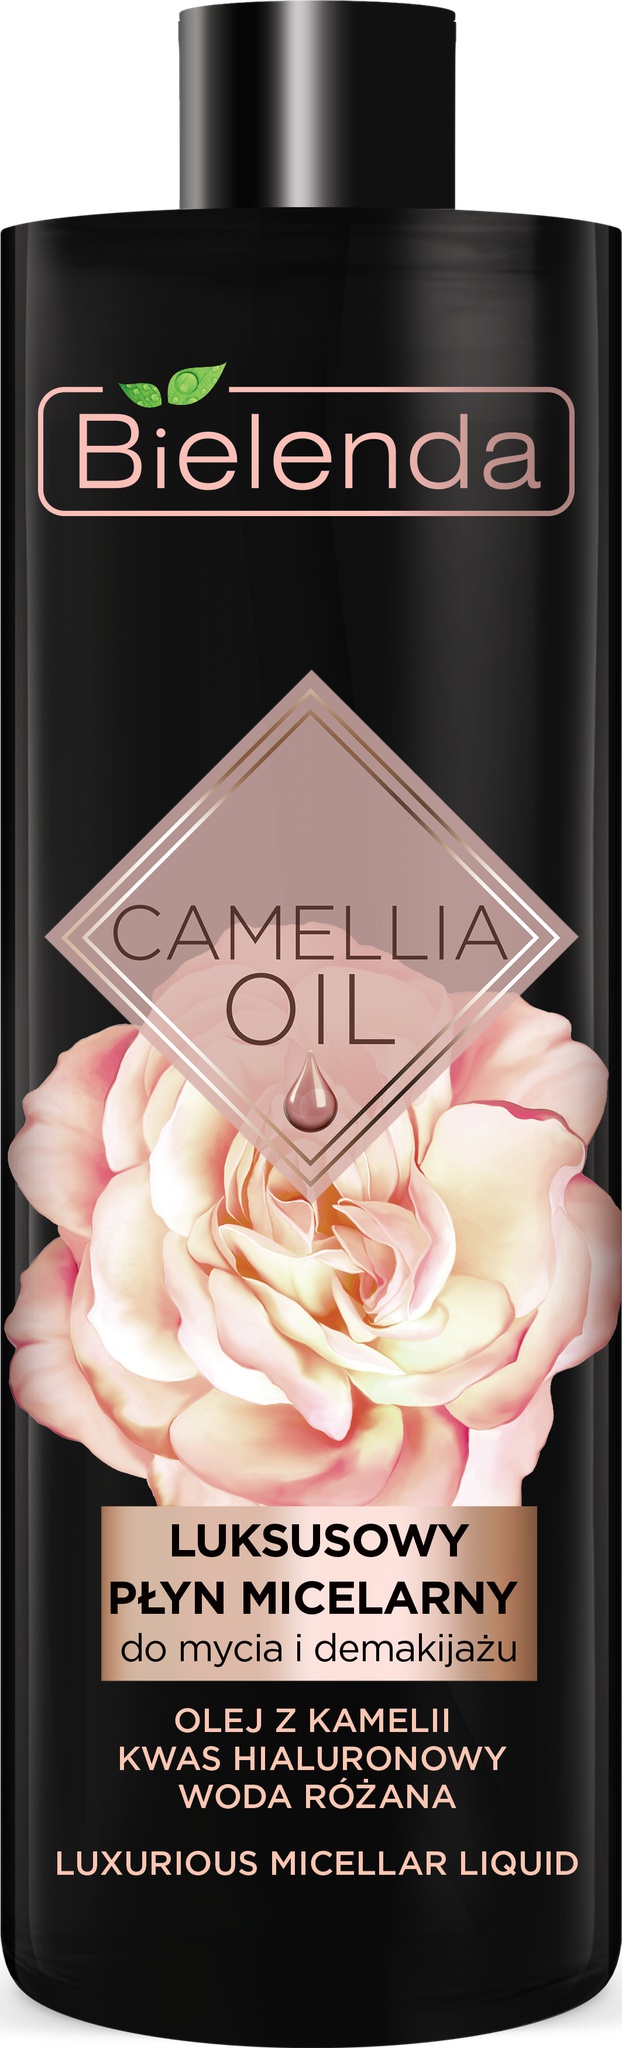 Bielenda Camellia Oil Luxurious Micellar Liquid